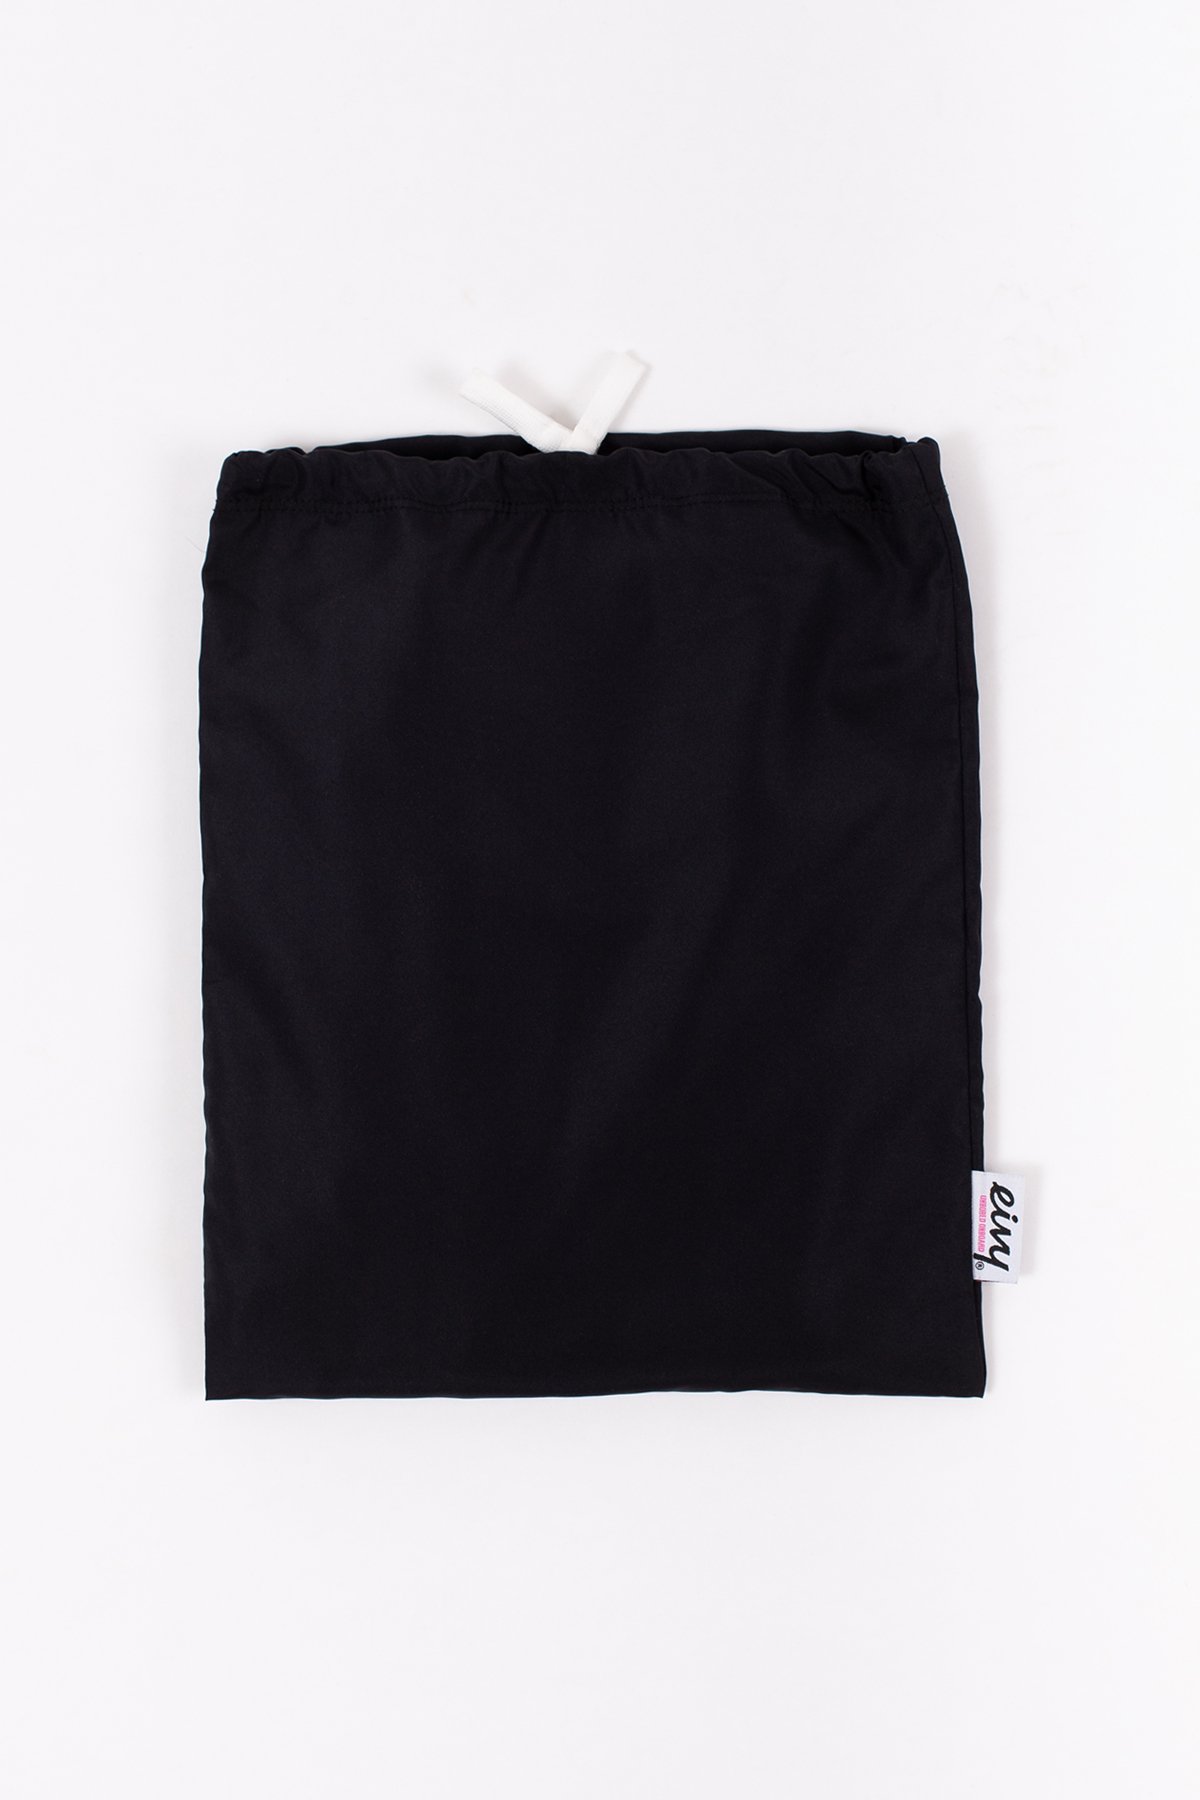 Sweatpants | Harlem Travel Pants - Black | M